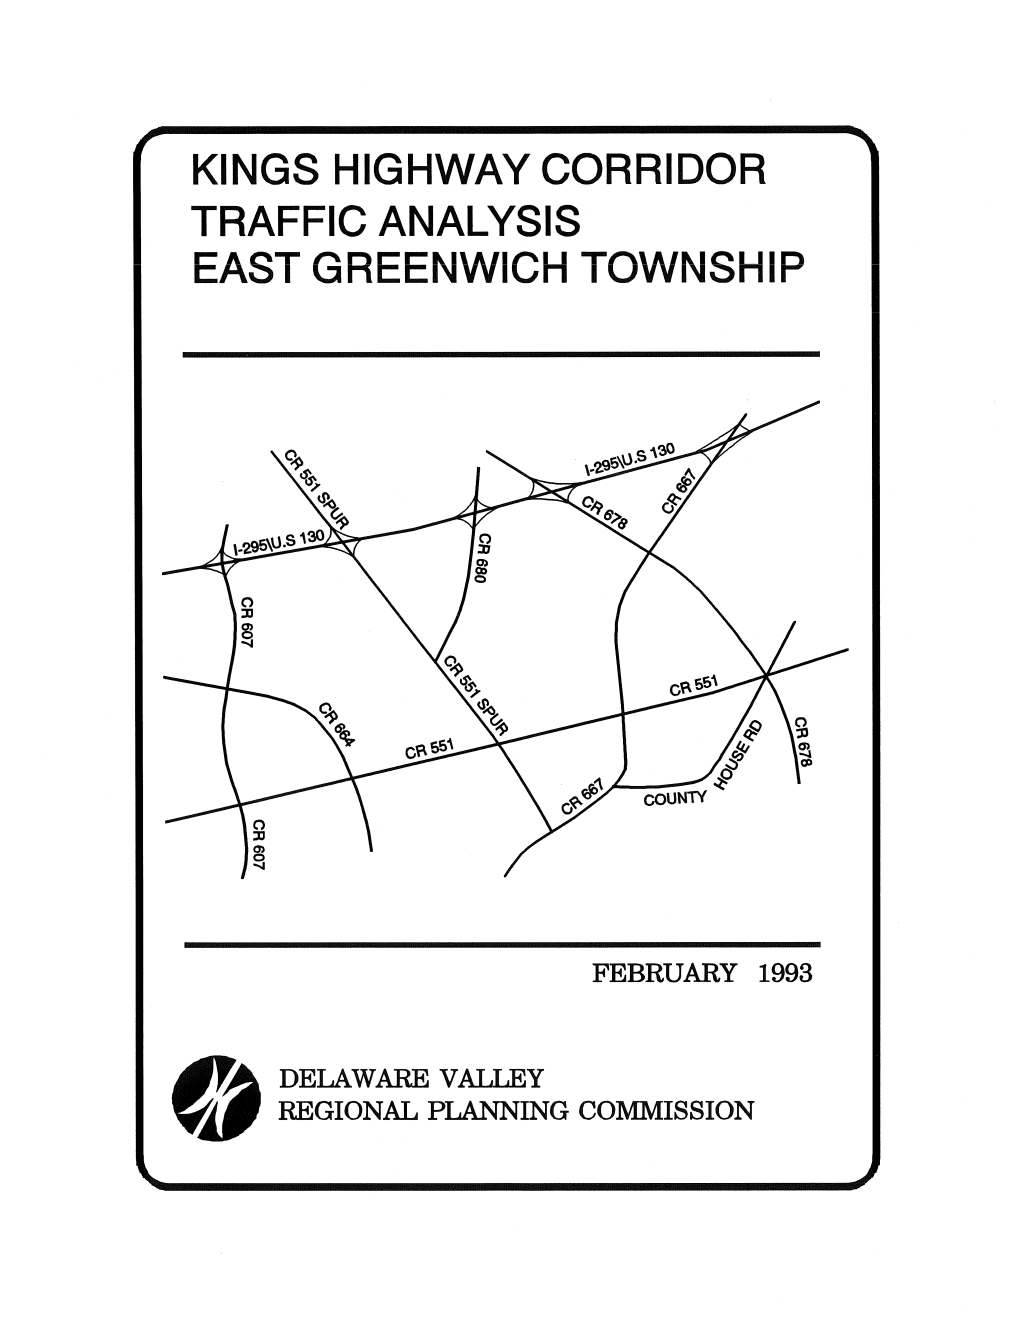 Kings Highway Corridor Traffic Analysis East Greenwich Township